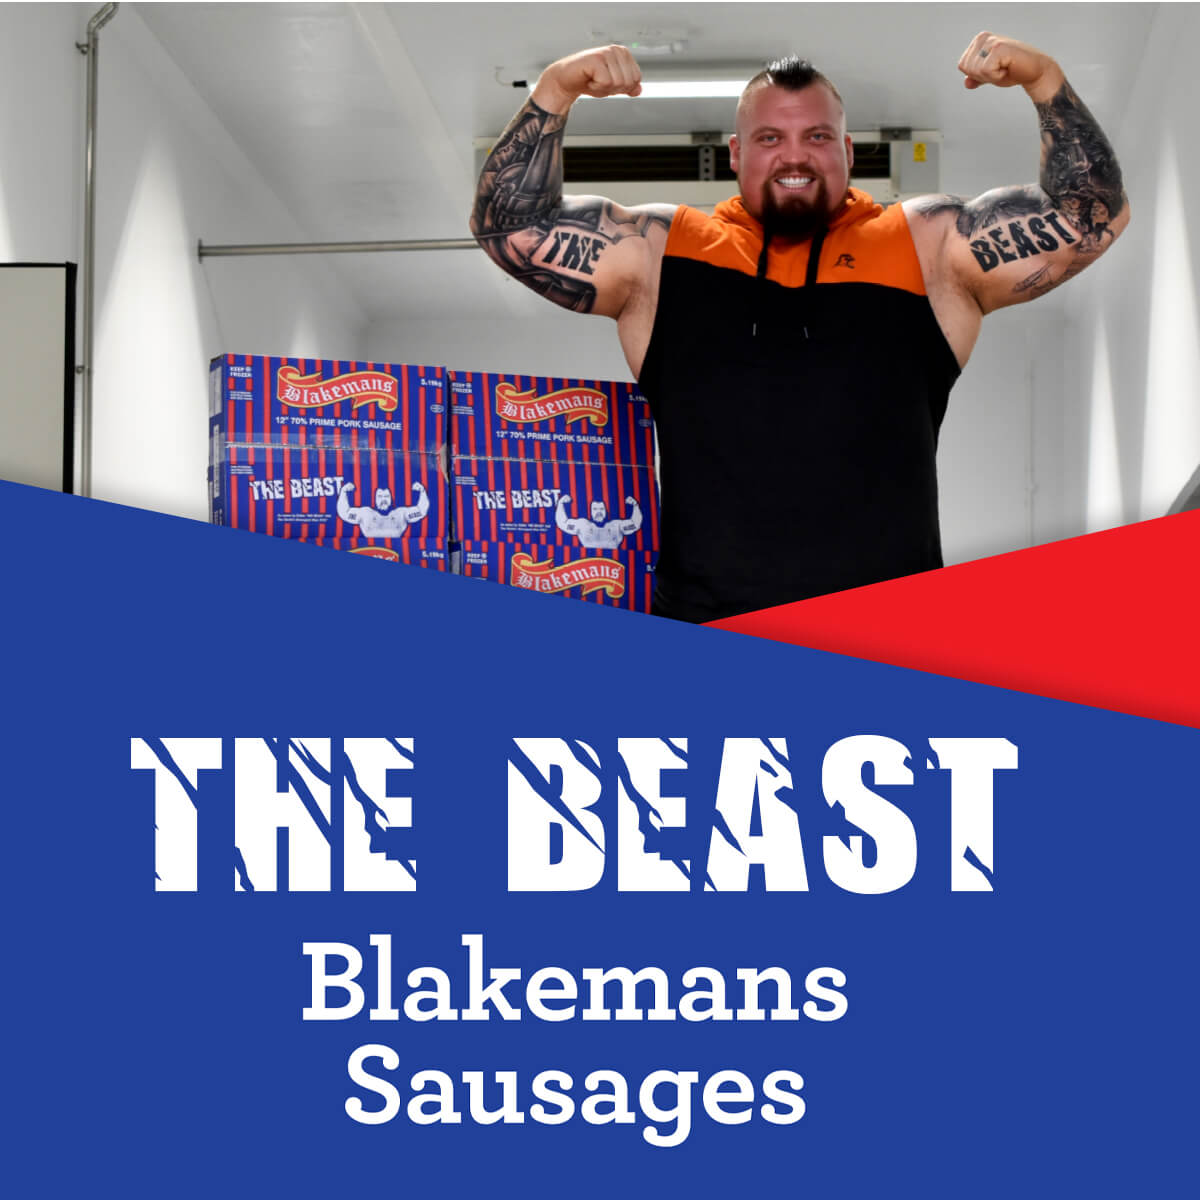 Blakemans Sausages - Eddie "The Beast" Hall Footlong Pork Sausage